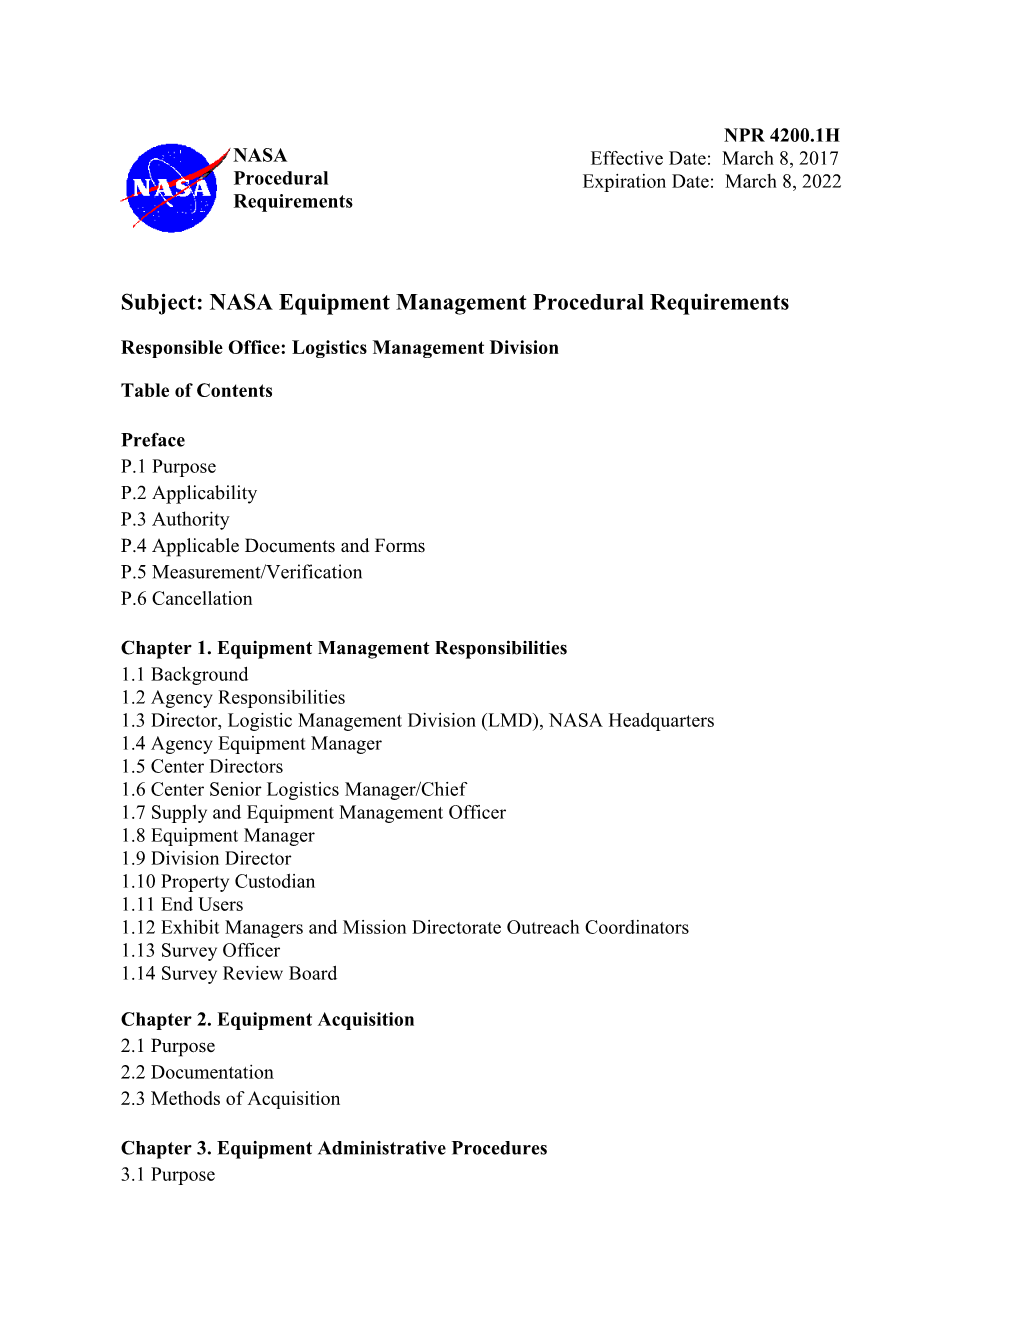 Subject: NASA Equipment Management Procedural Requirements